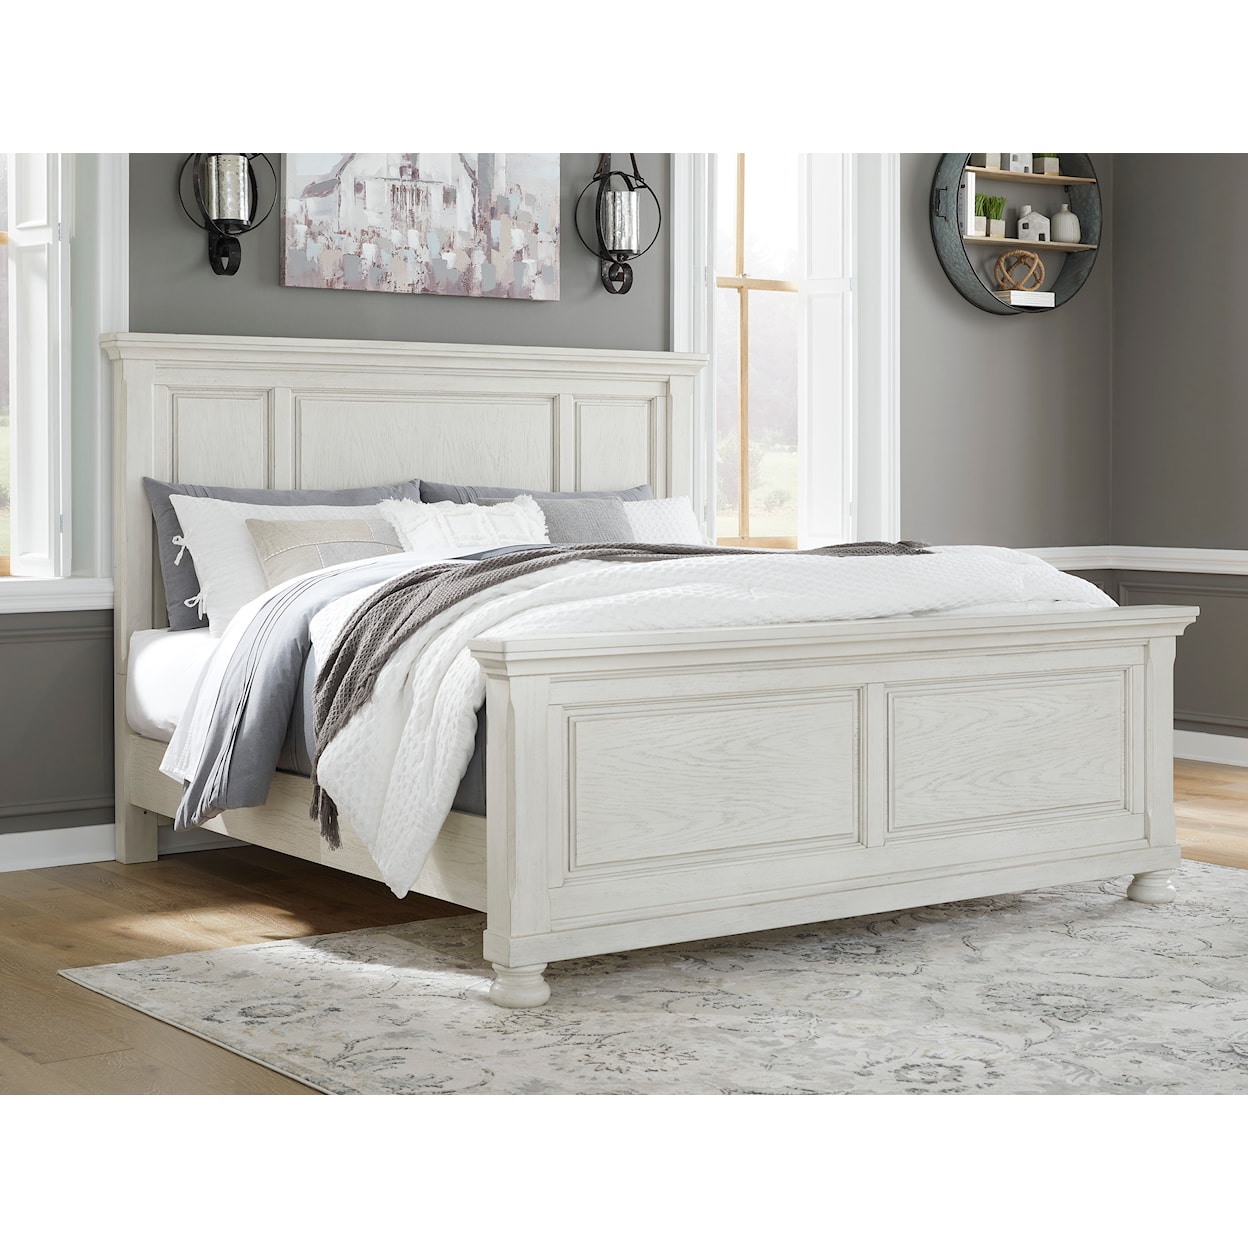 Ashley Furniture Signature Design Robbinsdale King Panel Bed